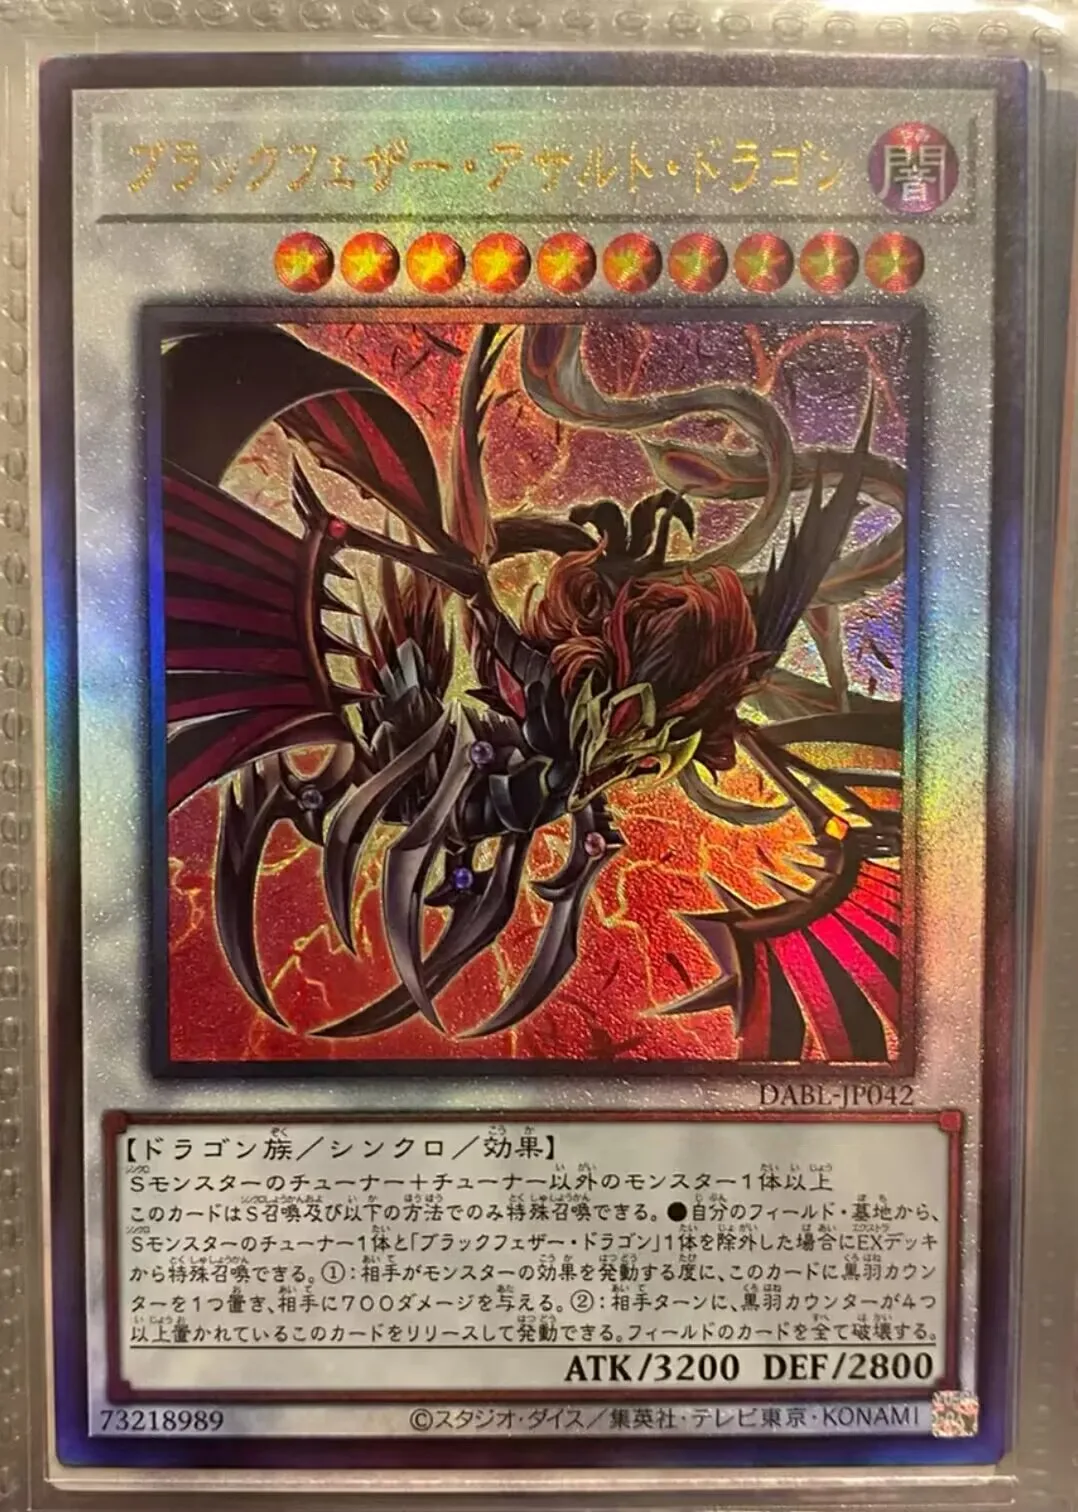 

Duel Master Black-Winged Assault Dragon Ultimate Rare DABL-JP042 Darkwing Blast YuGiOh Collection Card